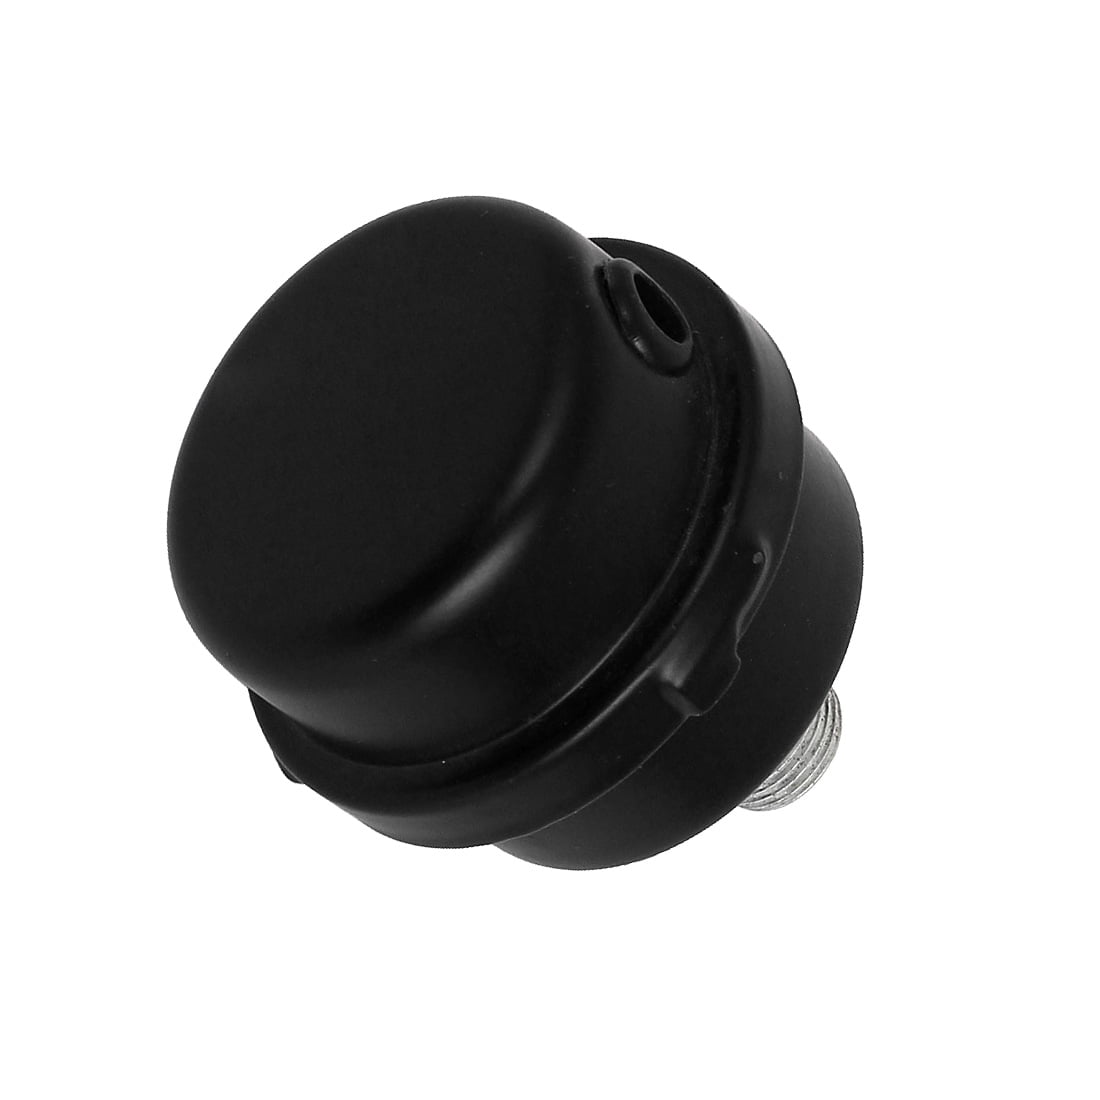 Details about   16mm Diameter Male Silent Air Compressor Parts Muffler Silencer Filter Black 